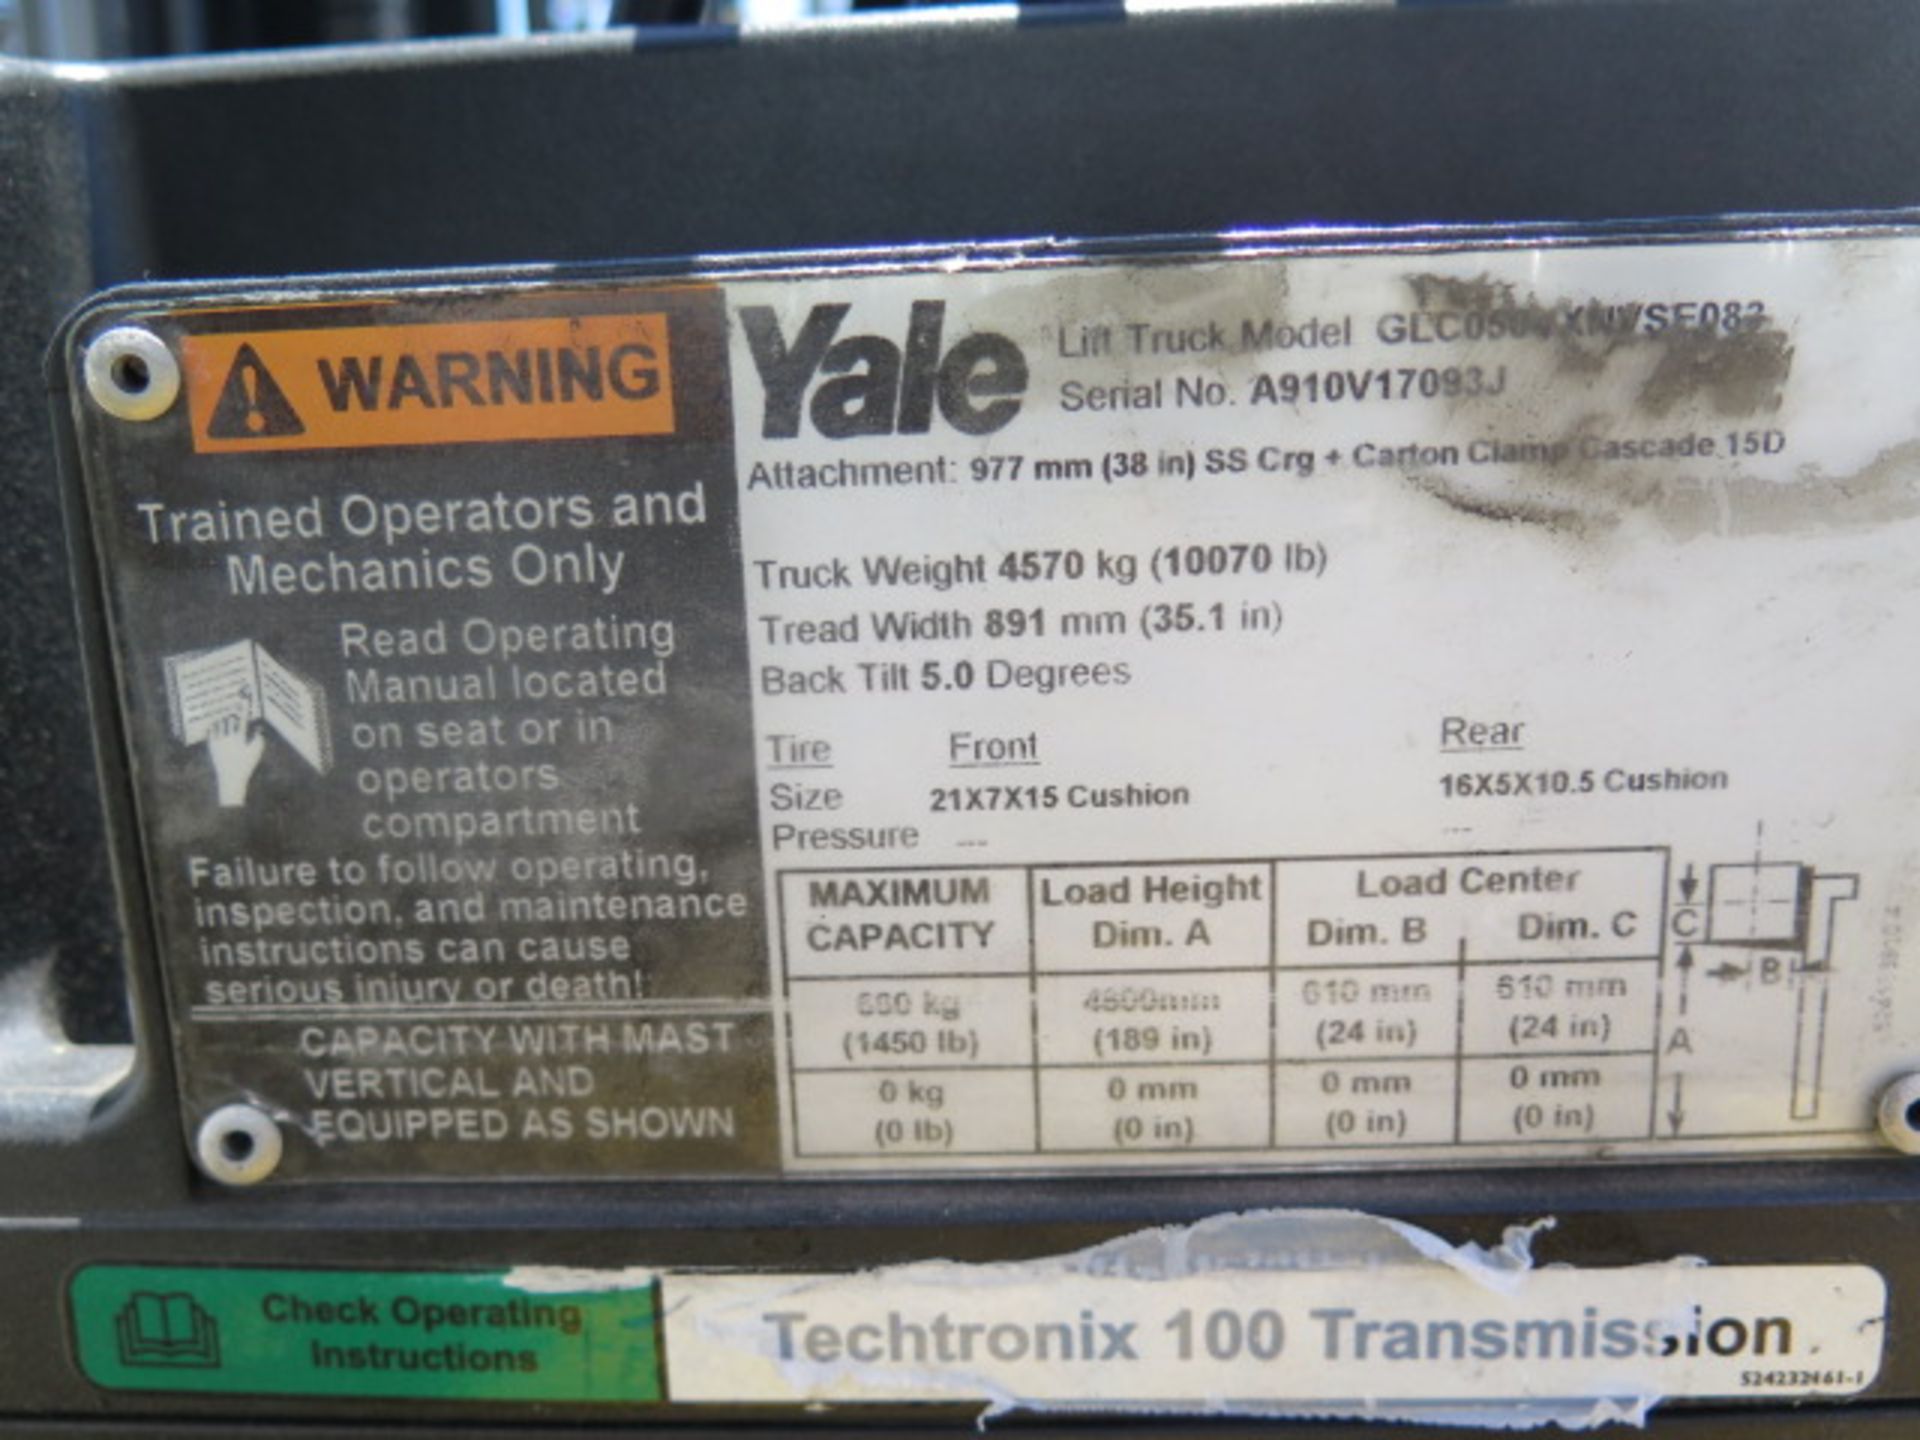 2012 Yale GLC050VXNVSE083 5000 Lb LPG Forklift s/n A910V17093J w/ 3-Stage, SS, 189” Lift, SOLD AS IS - Bild 20 aus 20